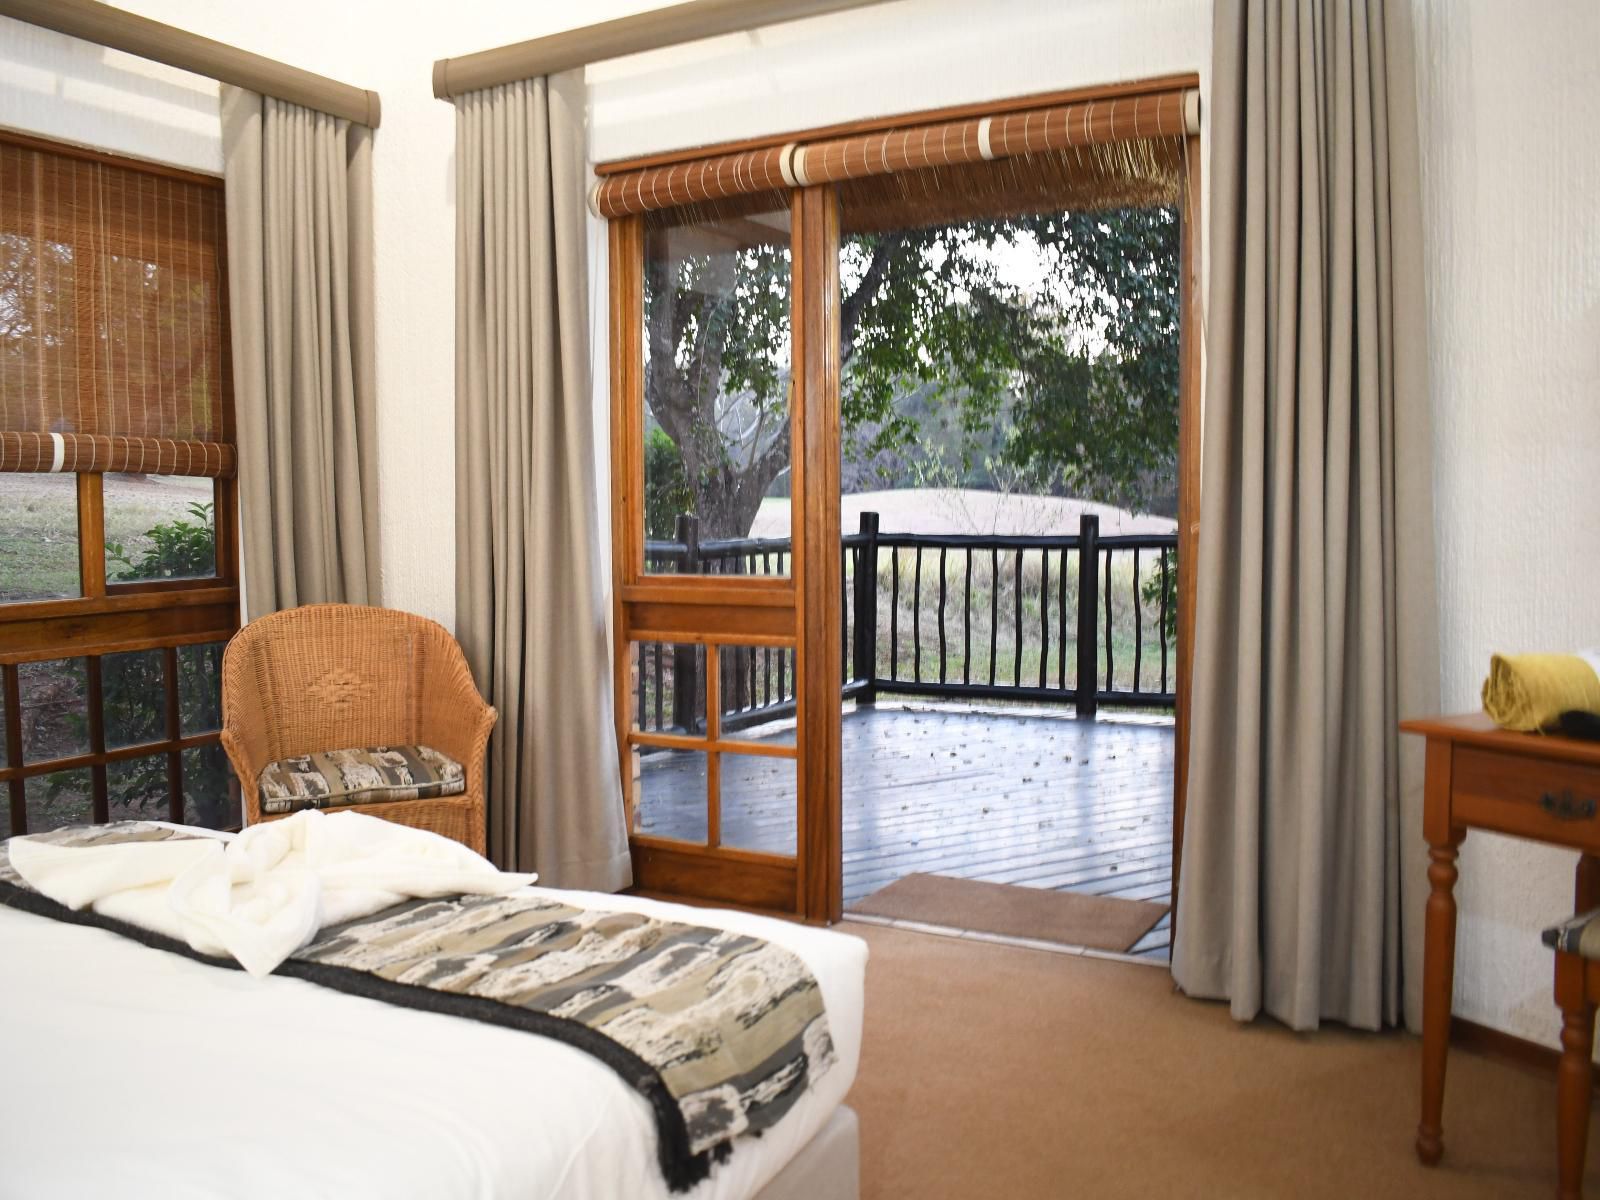 Kruger Park Lodge Unit 245 Hazyview Mpumalanga South Africa Bedroom